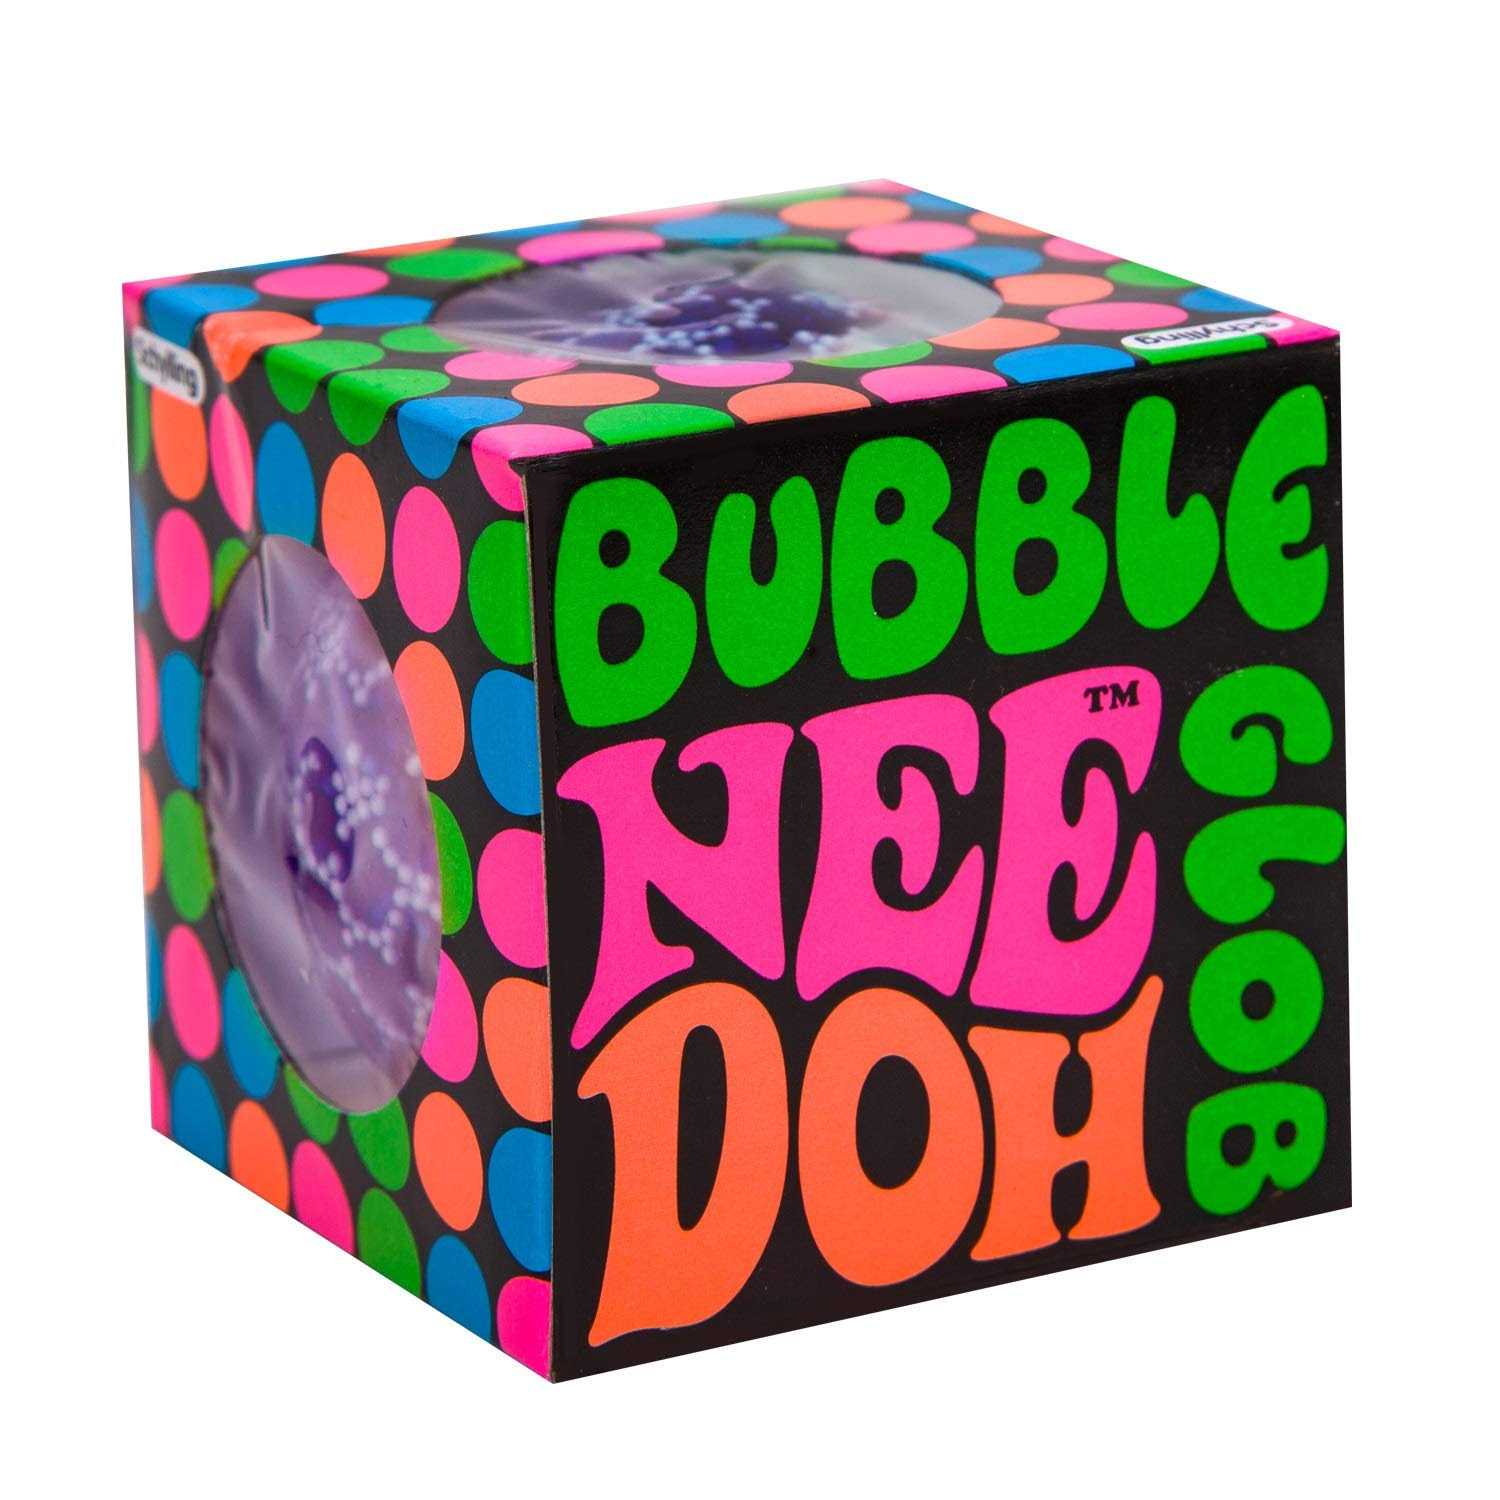 Schylling - Bubble Glob Nee-Doh Stress Ball